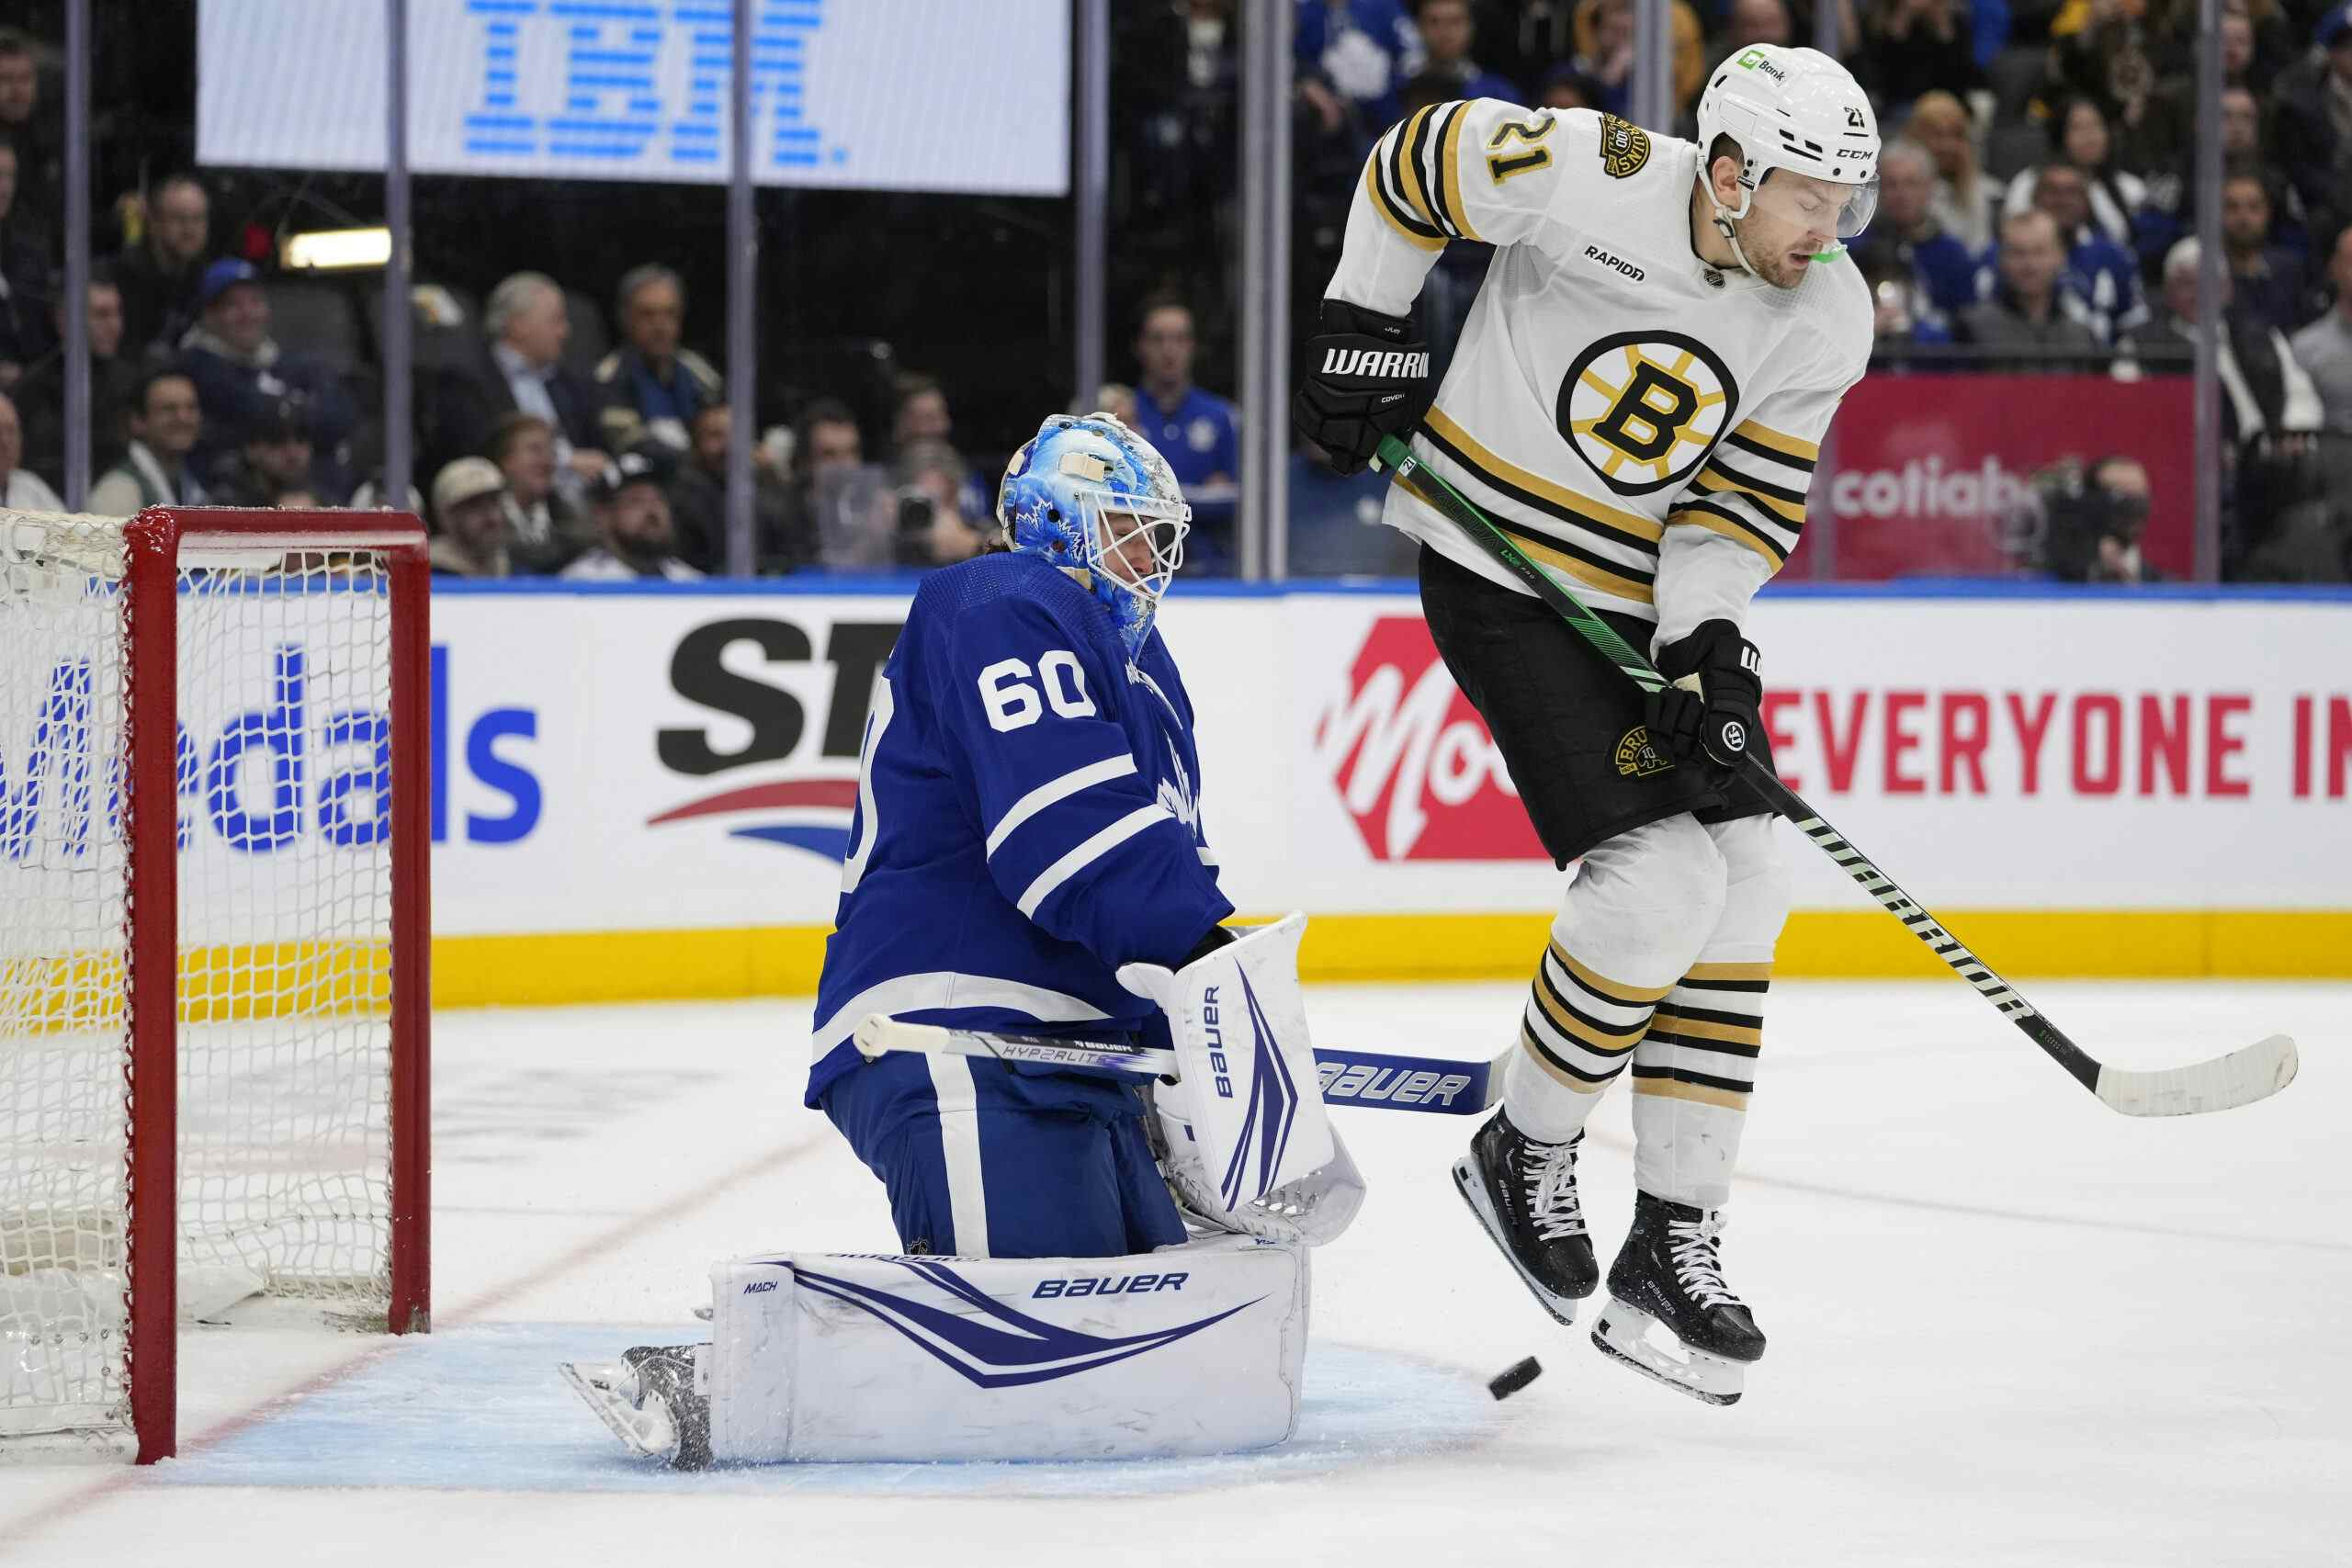 Boston Bruins forward James van Riemsdyk screens Maple Leafs goalie Joseph Woll.